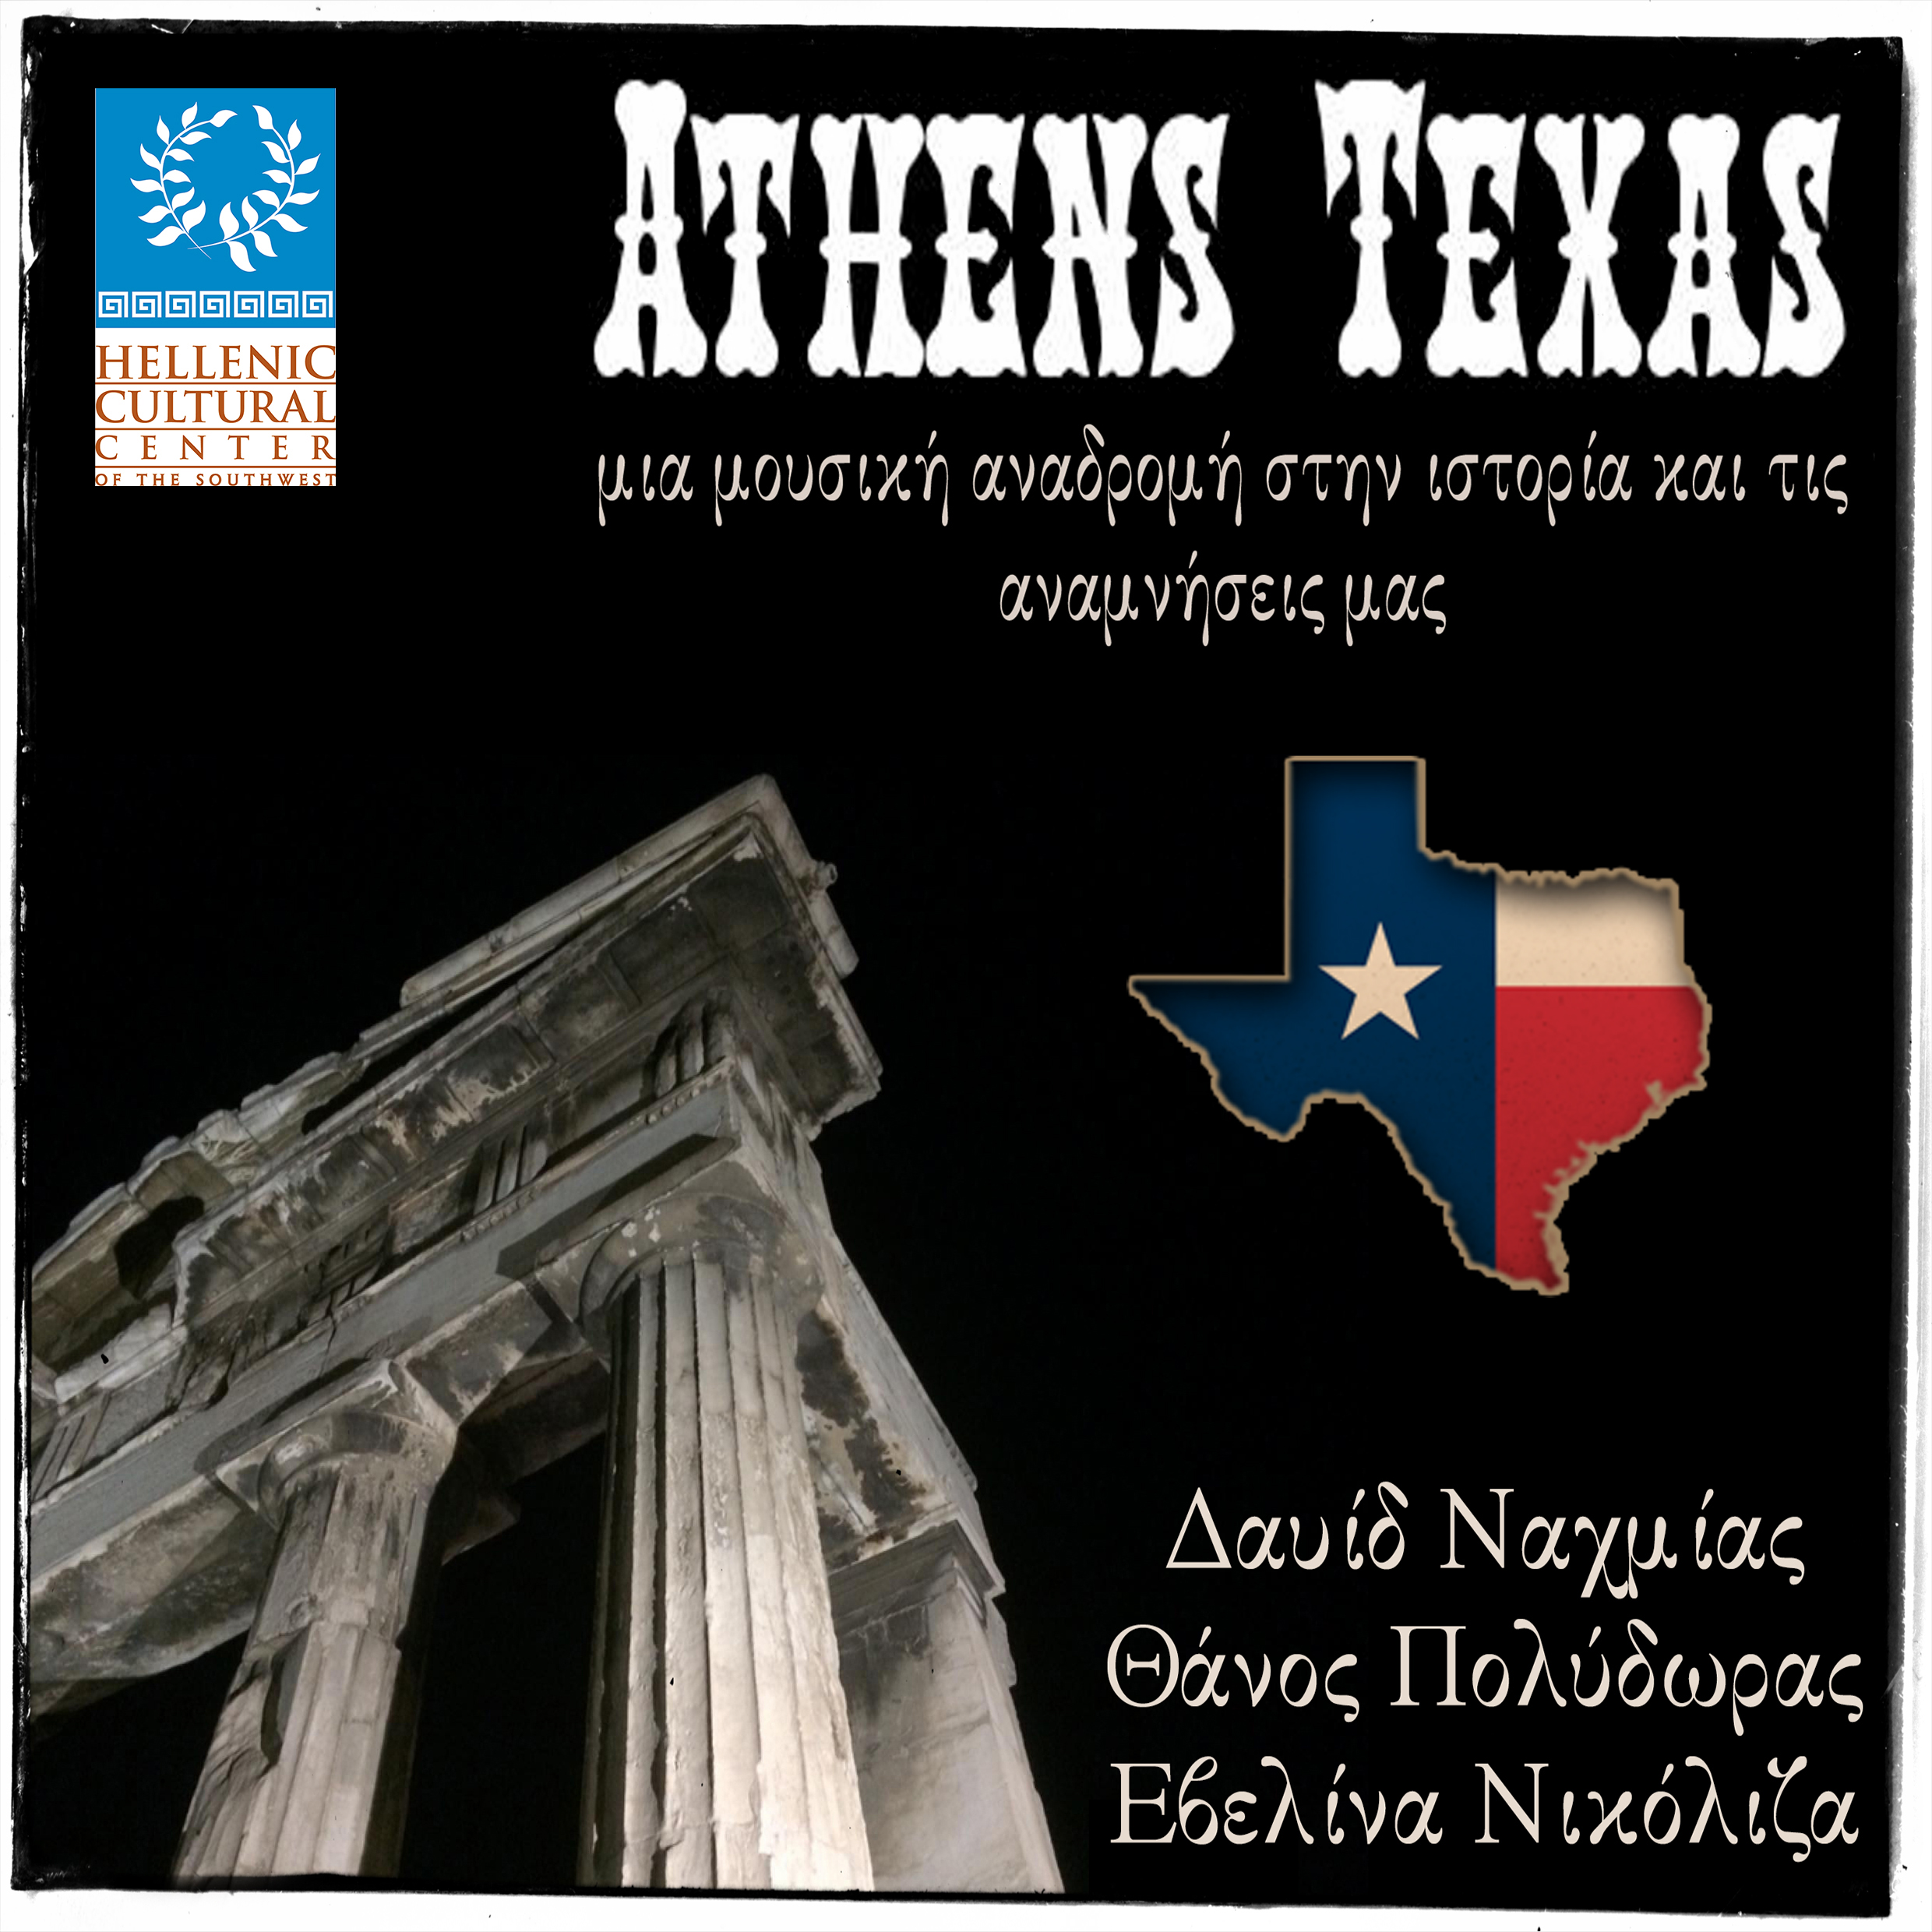 Athens Texas Music CD